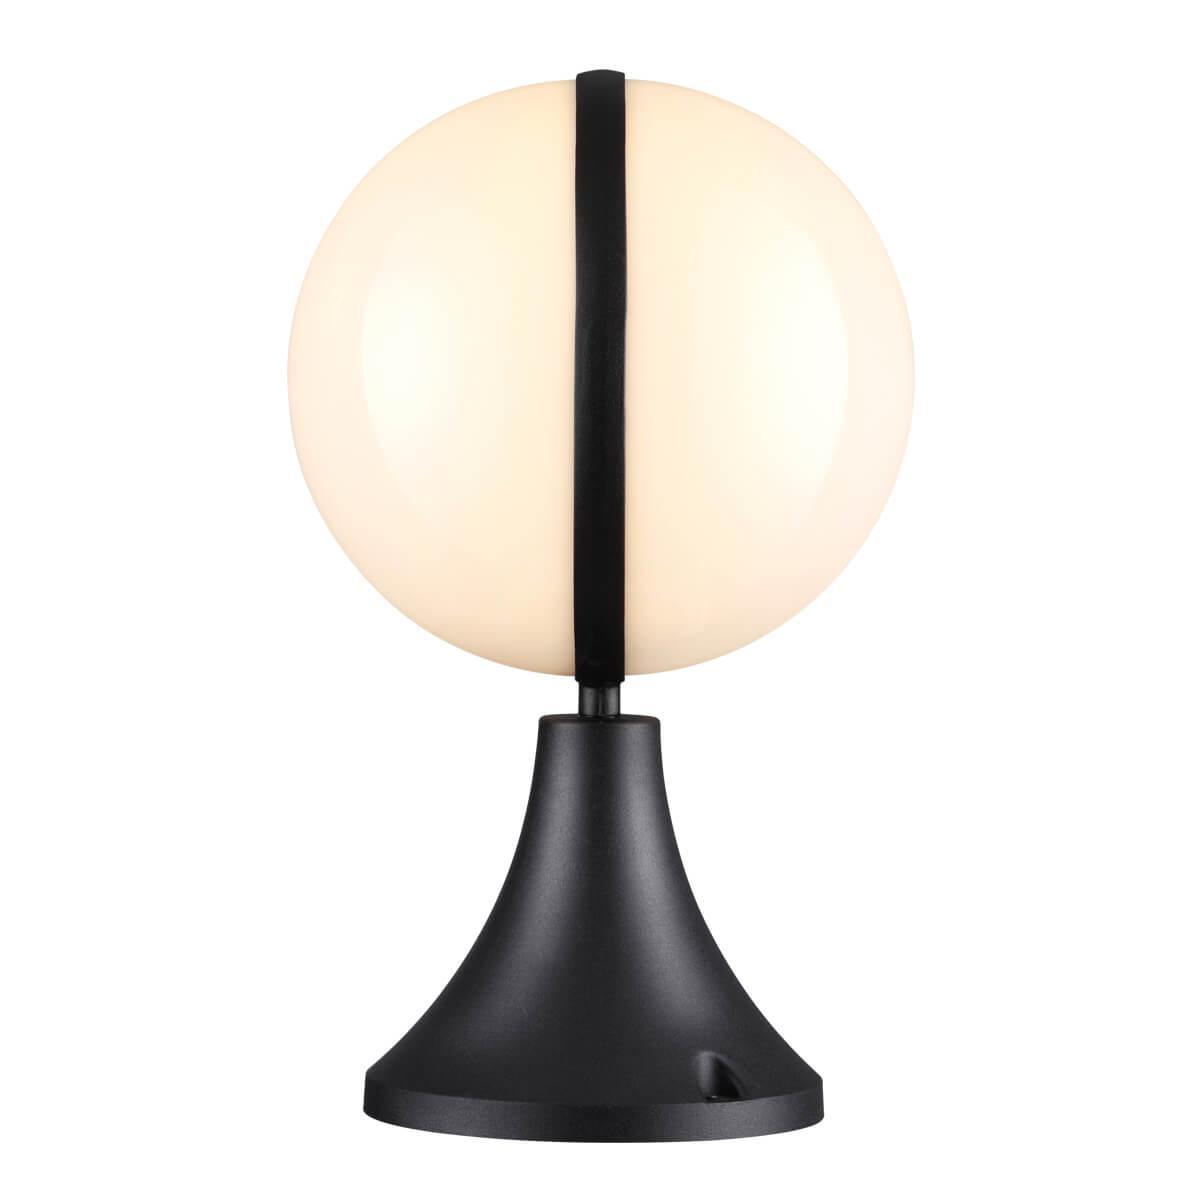 Ландшафтный светильник Odeon Light Lomeo 4832/1A маятник шары техно бамбук чёрный 18х22 5х14 см